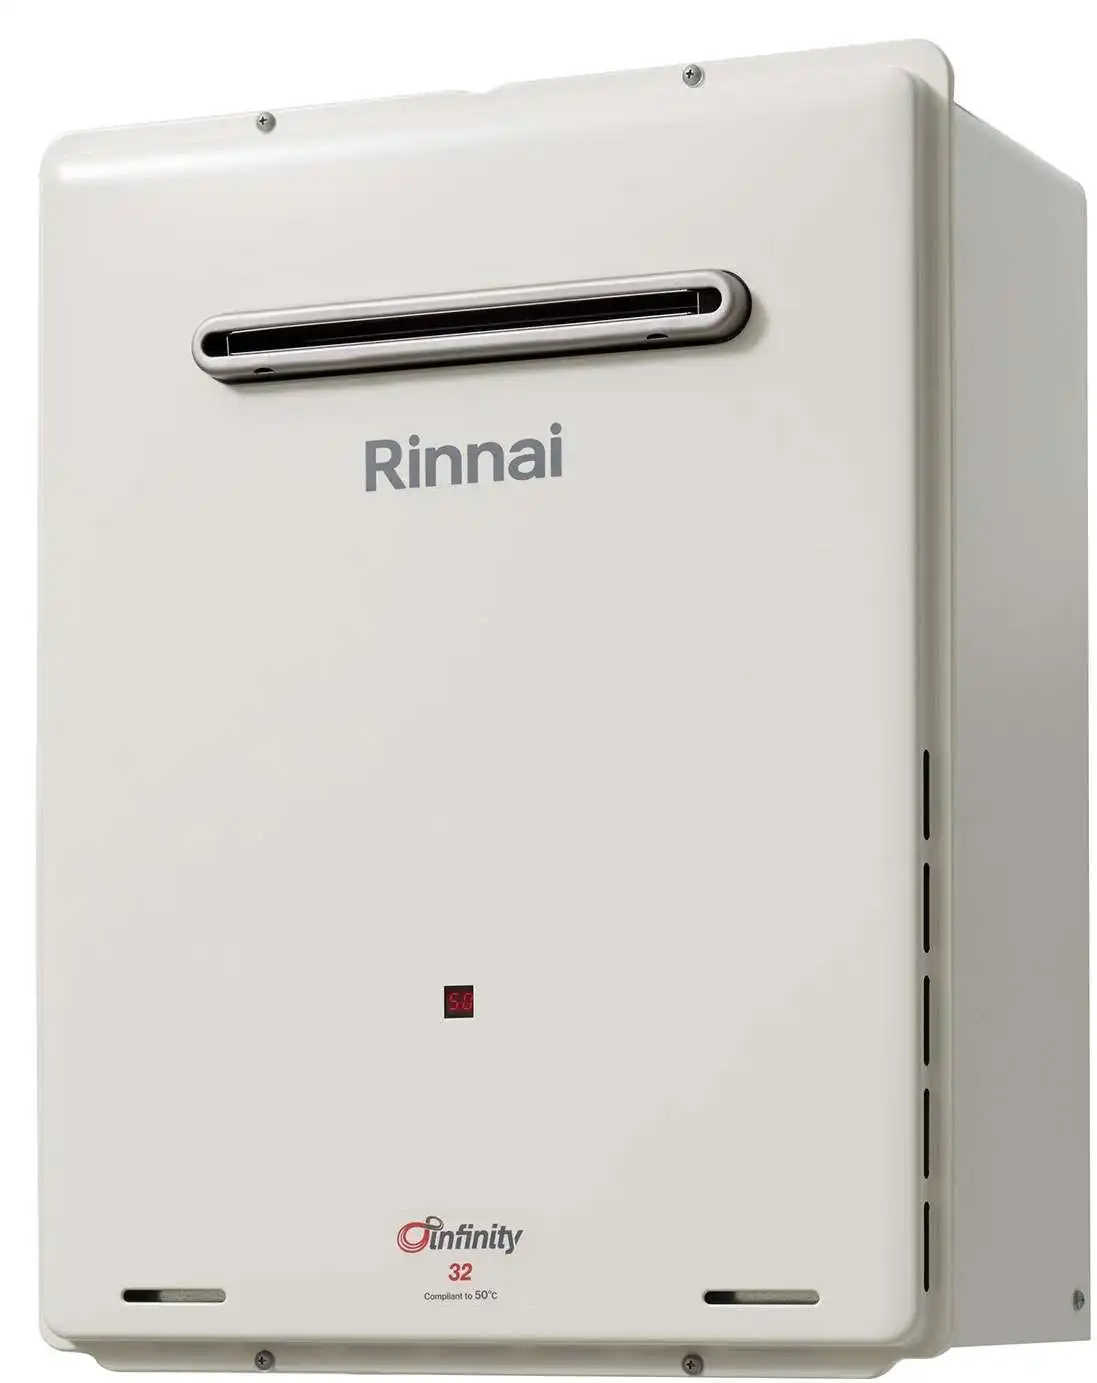 Rinnai Infinity 60oC 32L Instant Hot Water System INF32L60MA *LPG GAS*